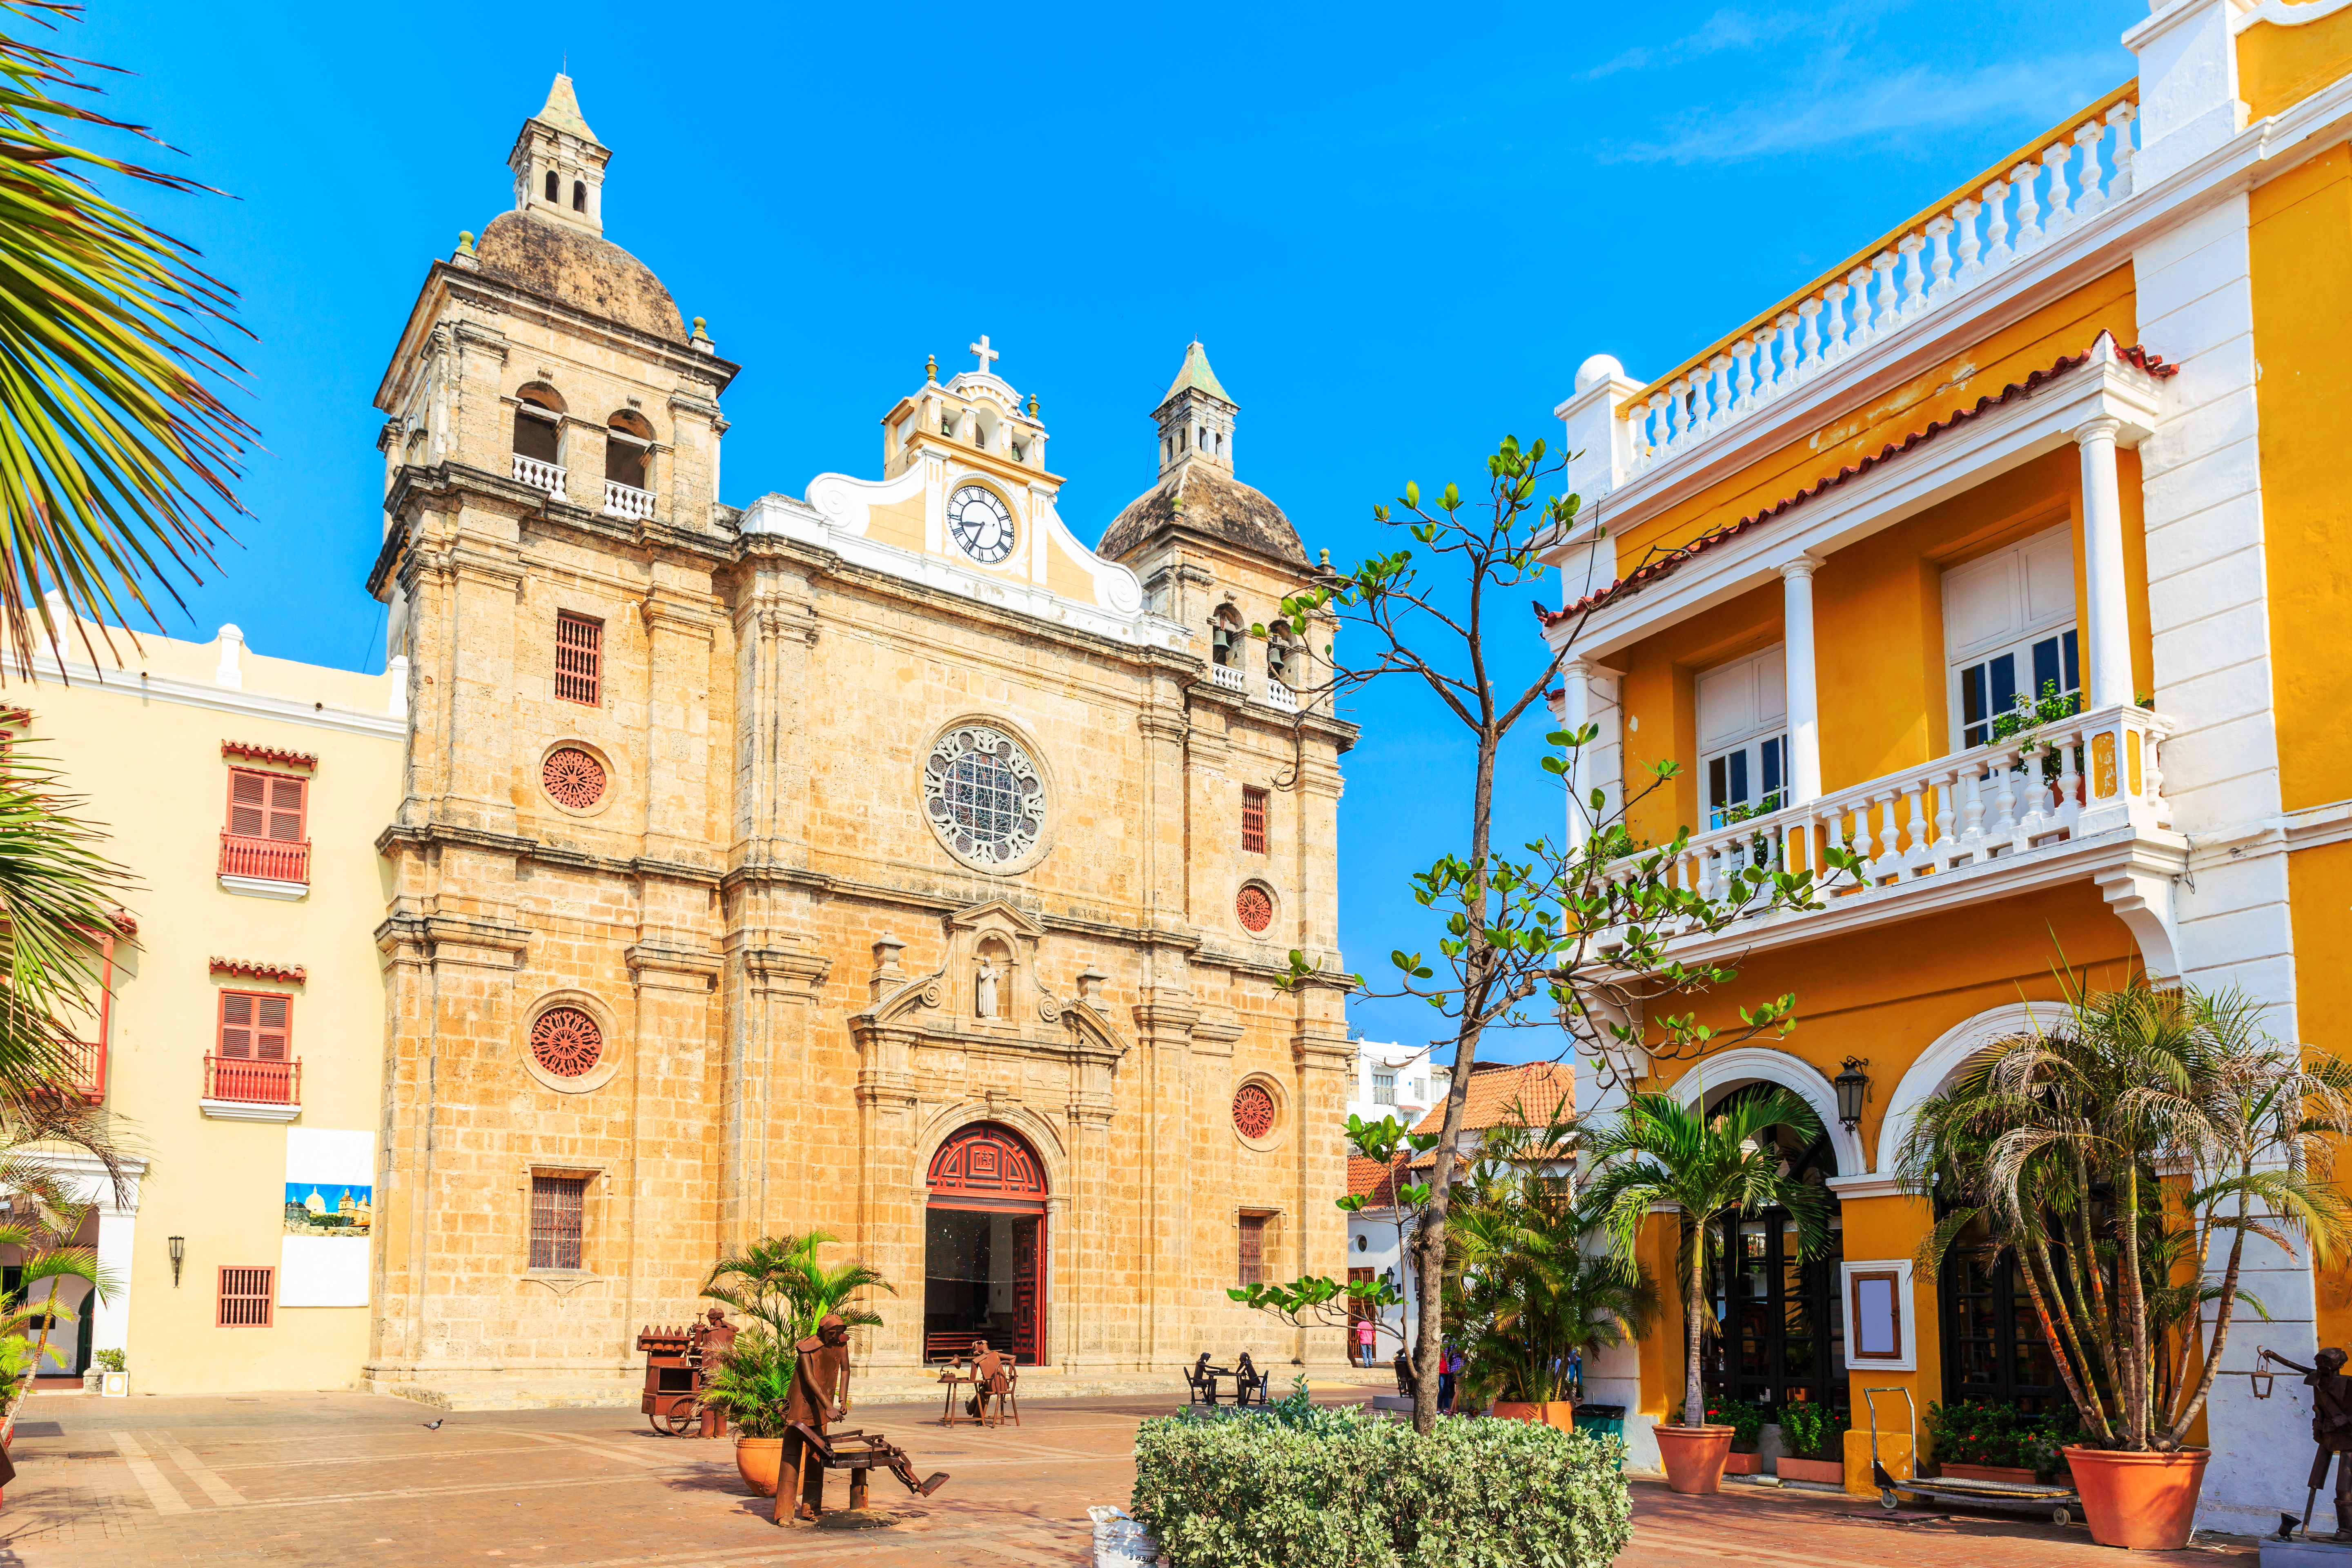 6-night Medellin & Cartagena escape with flights from $554